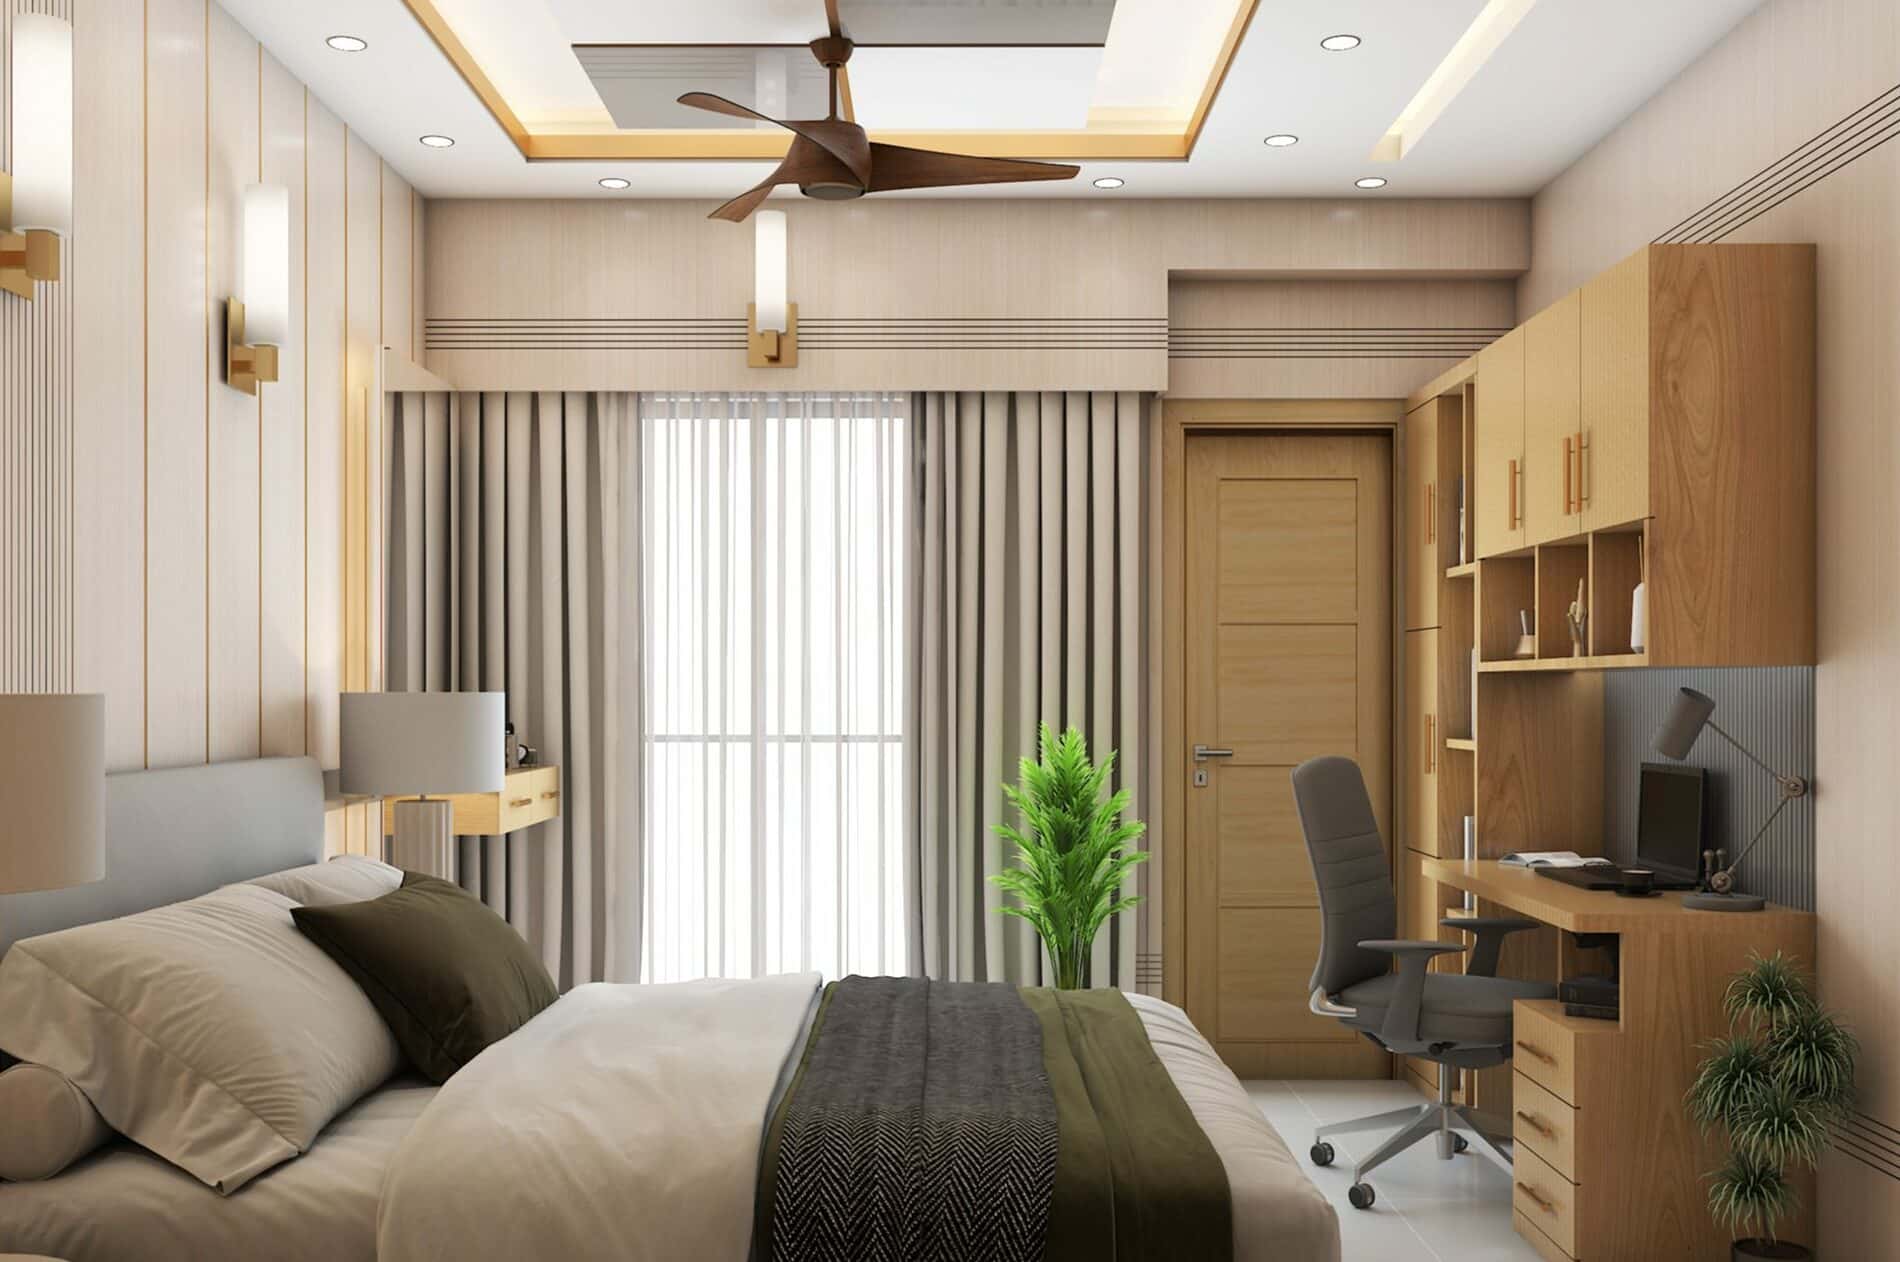 Ceiling Design | Bedroom Ceiling Design